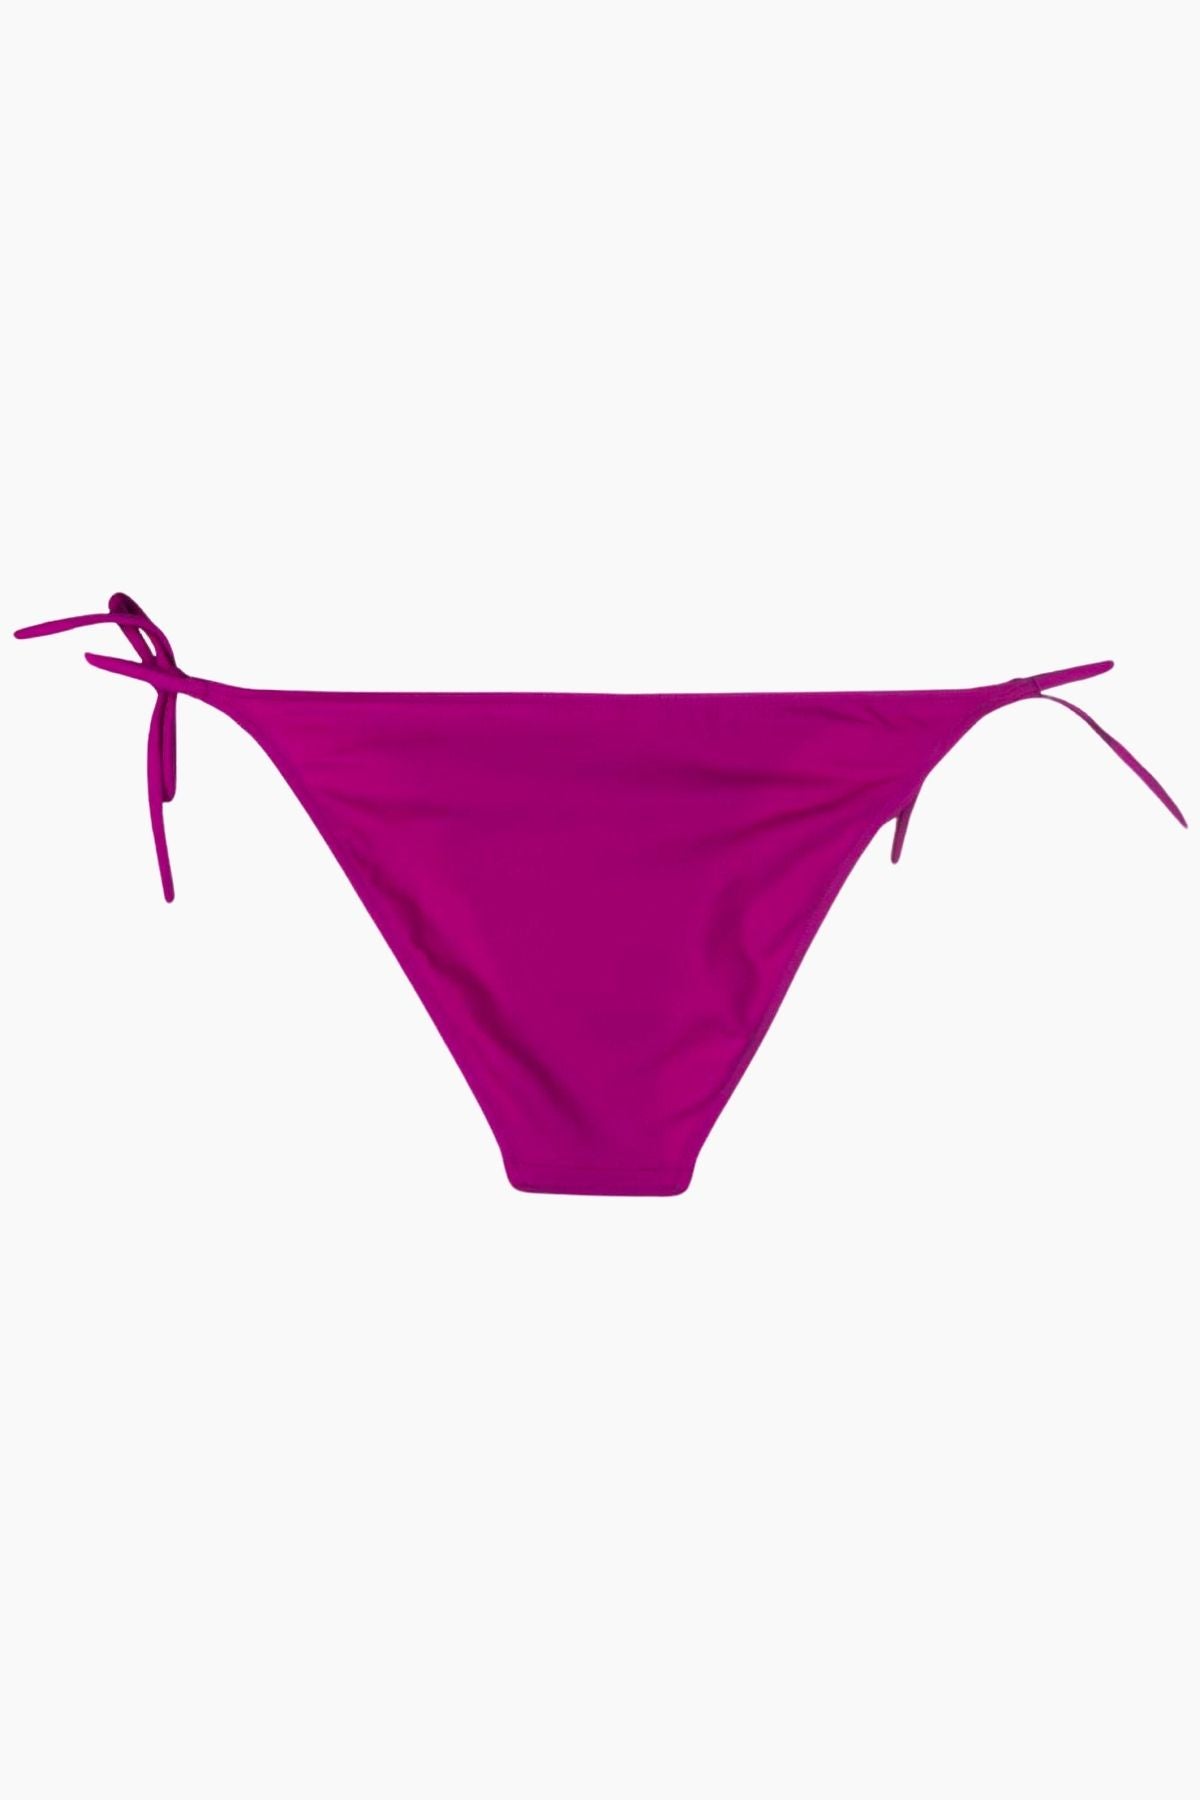 Eres Malou Side Tie Bikini Bottom - Sunset 23H Pink